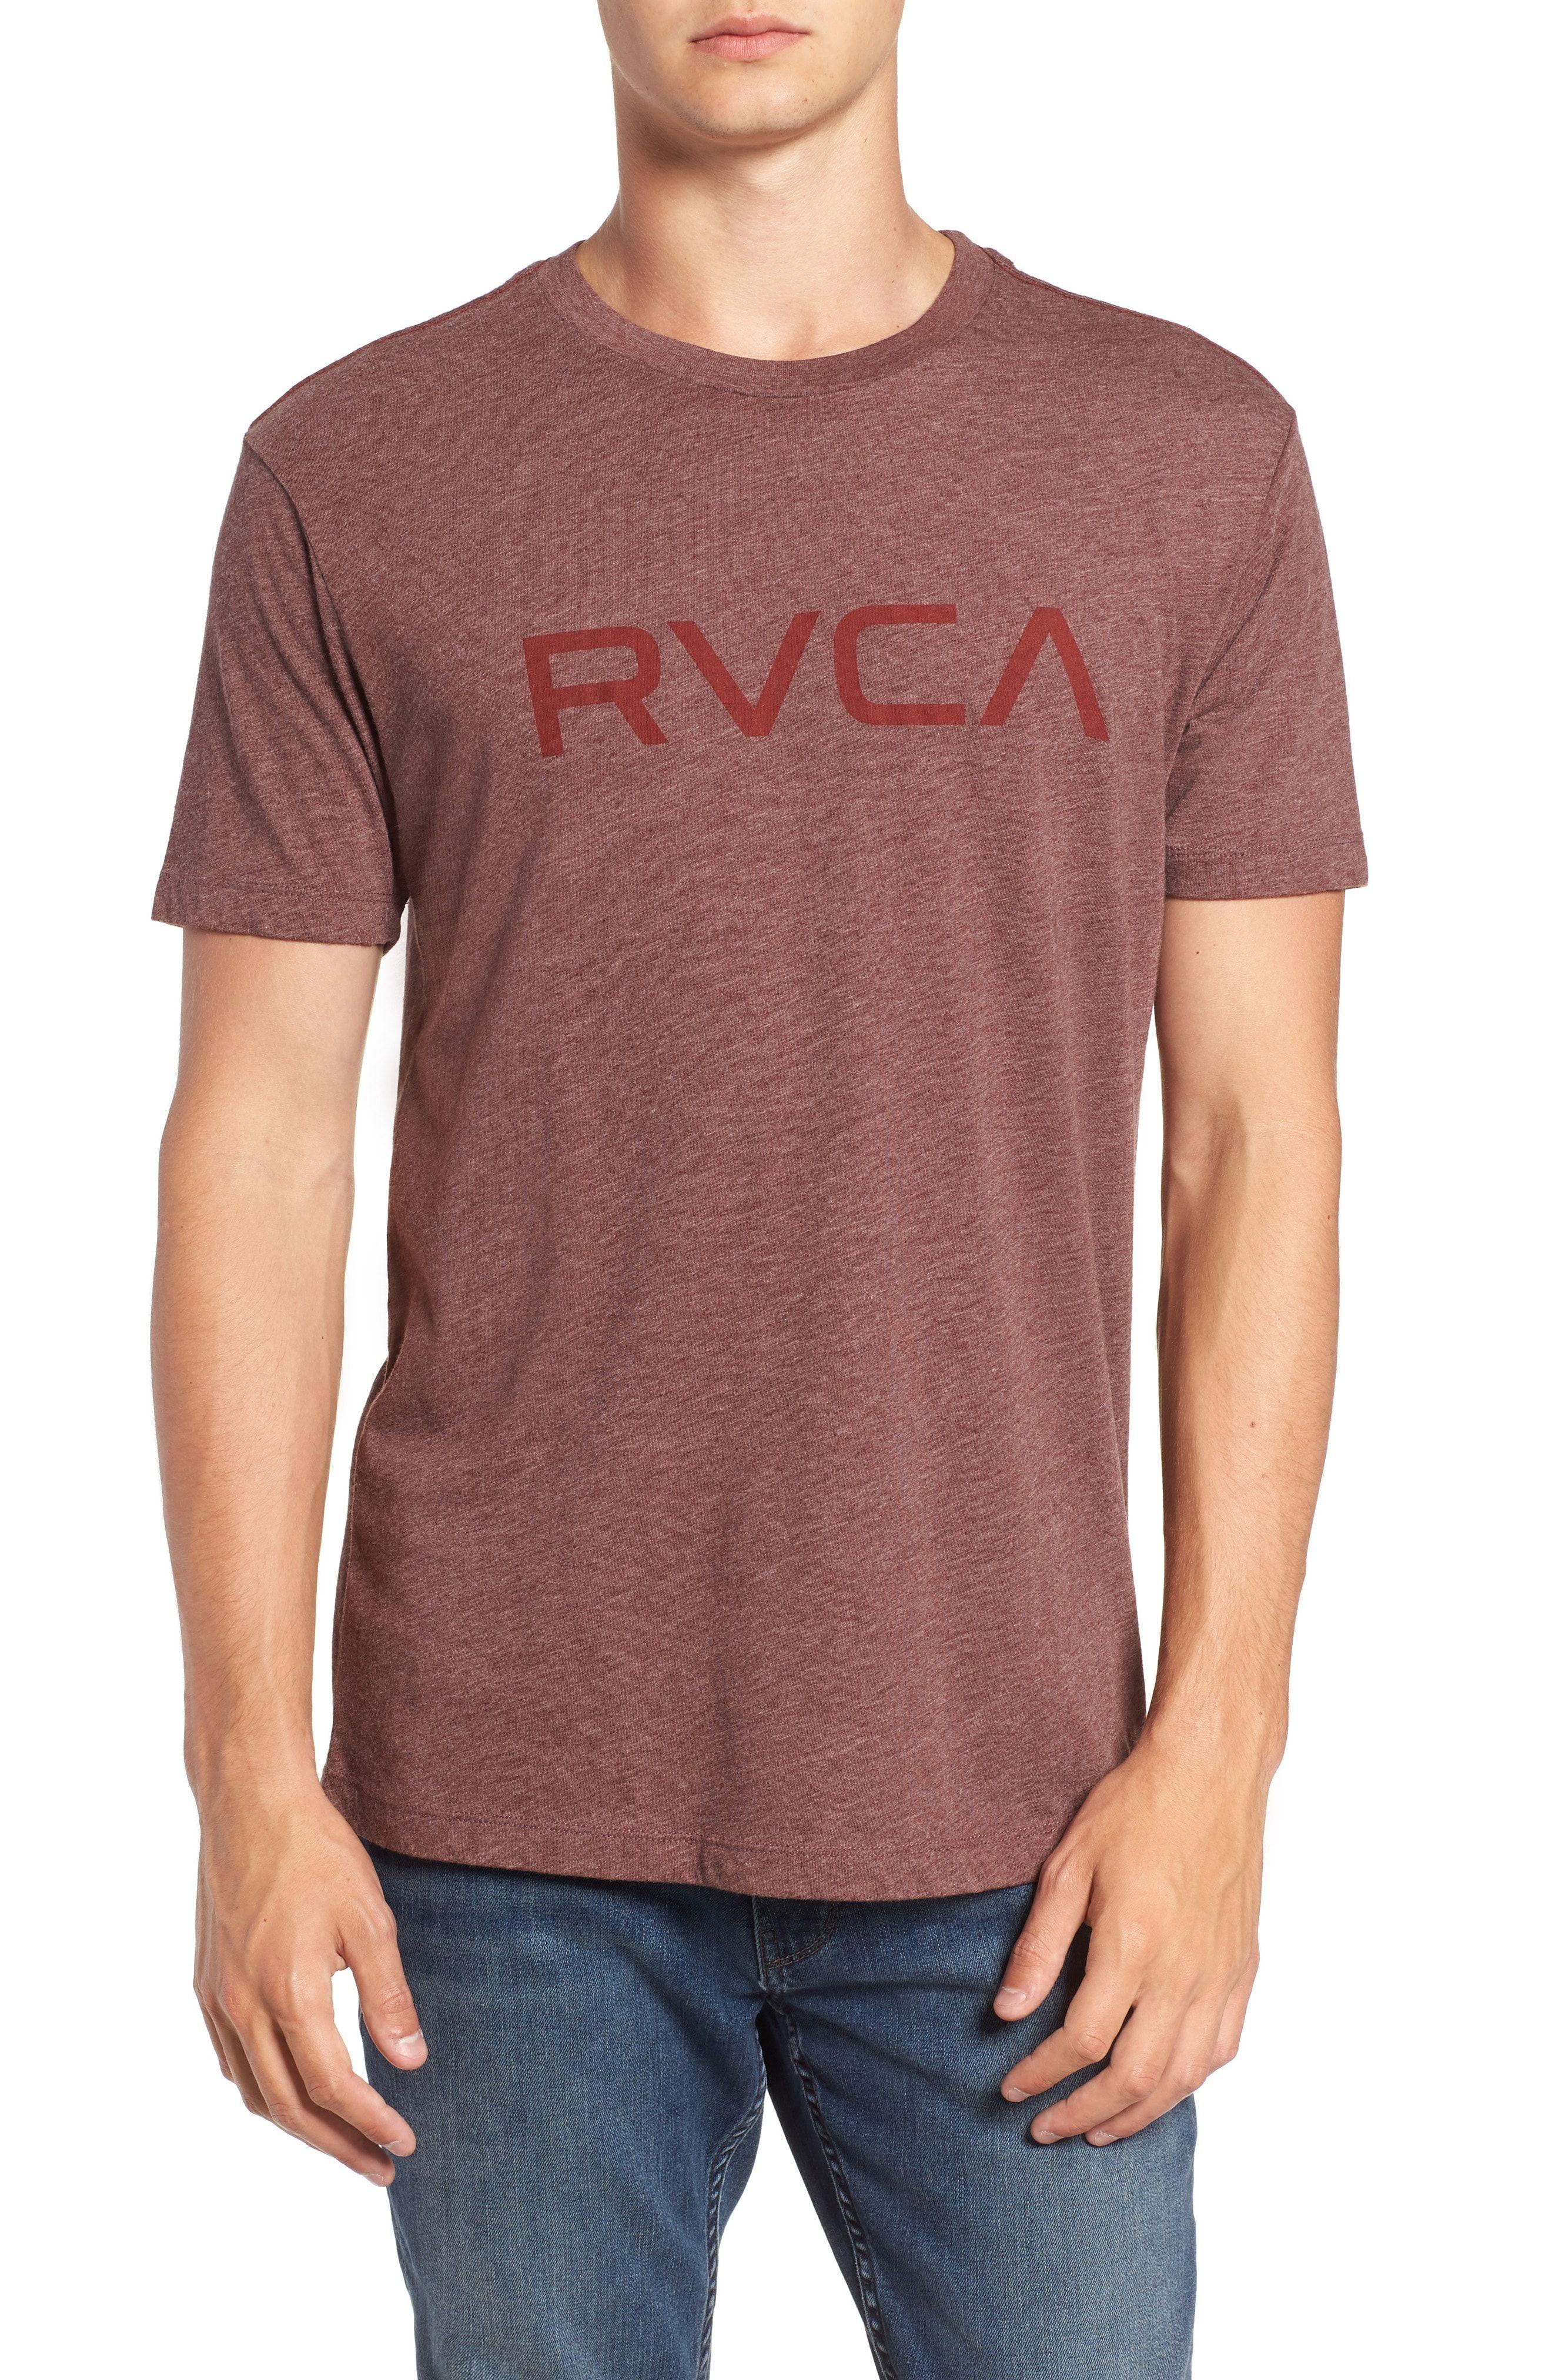 Red RVCA Logo - RVCA BIG LOGO T SHIRT. #rvca #cloth. Rvca. T